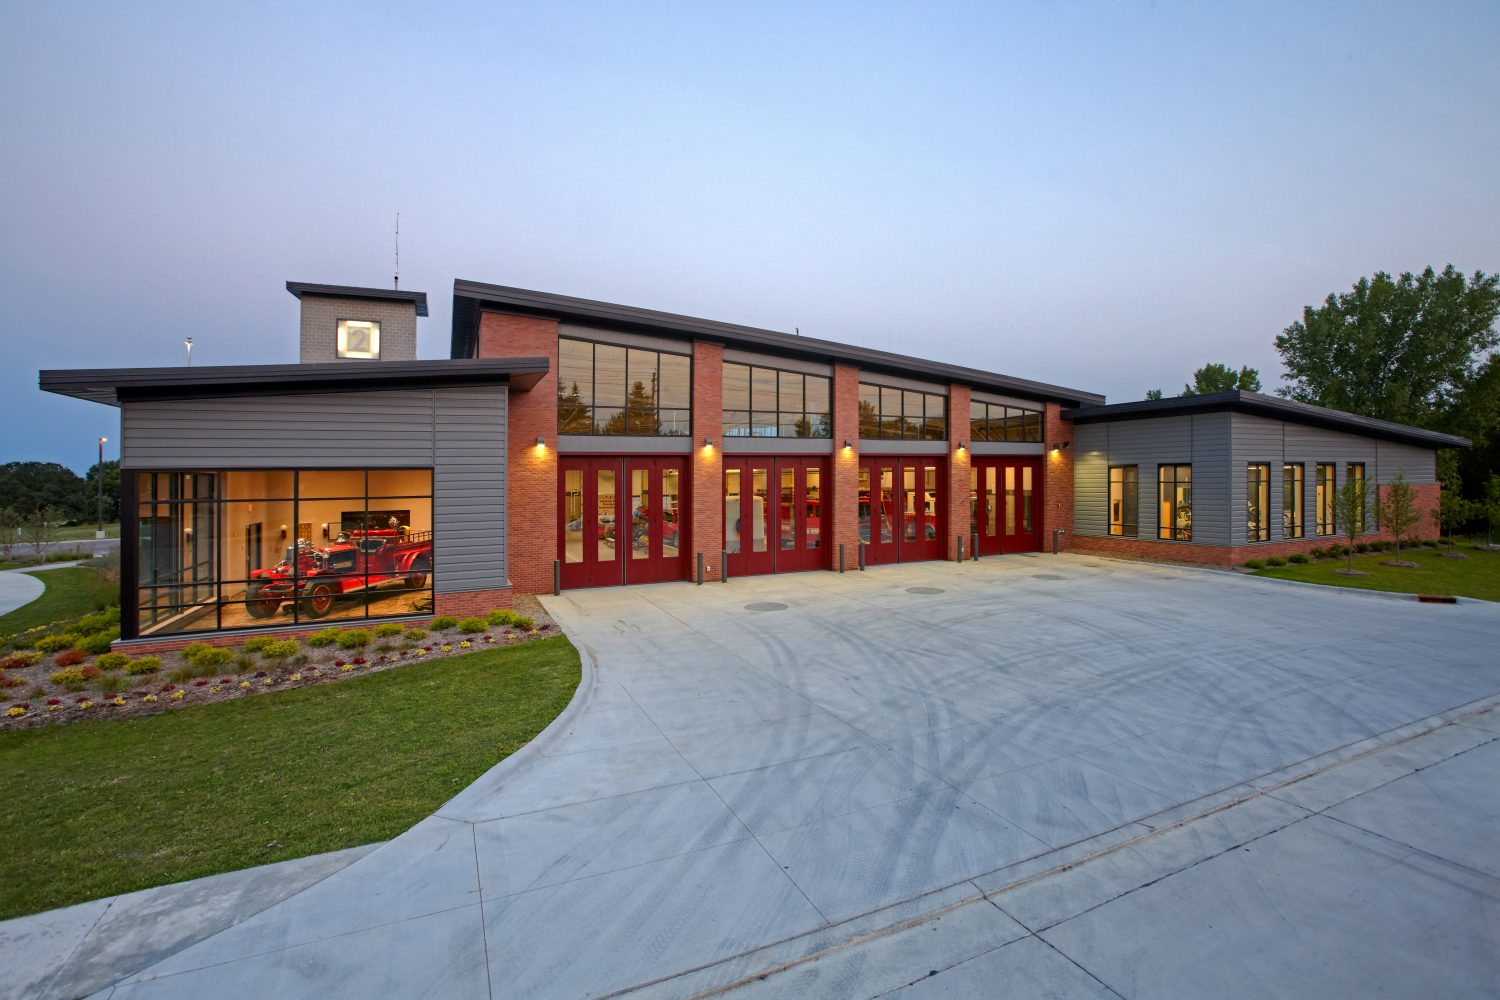 fire station design case study